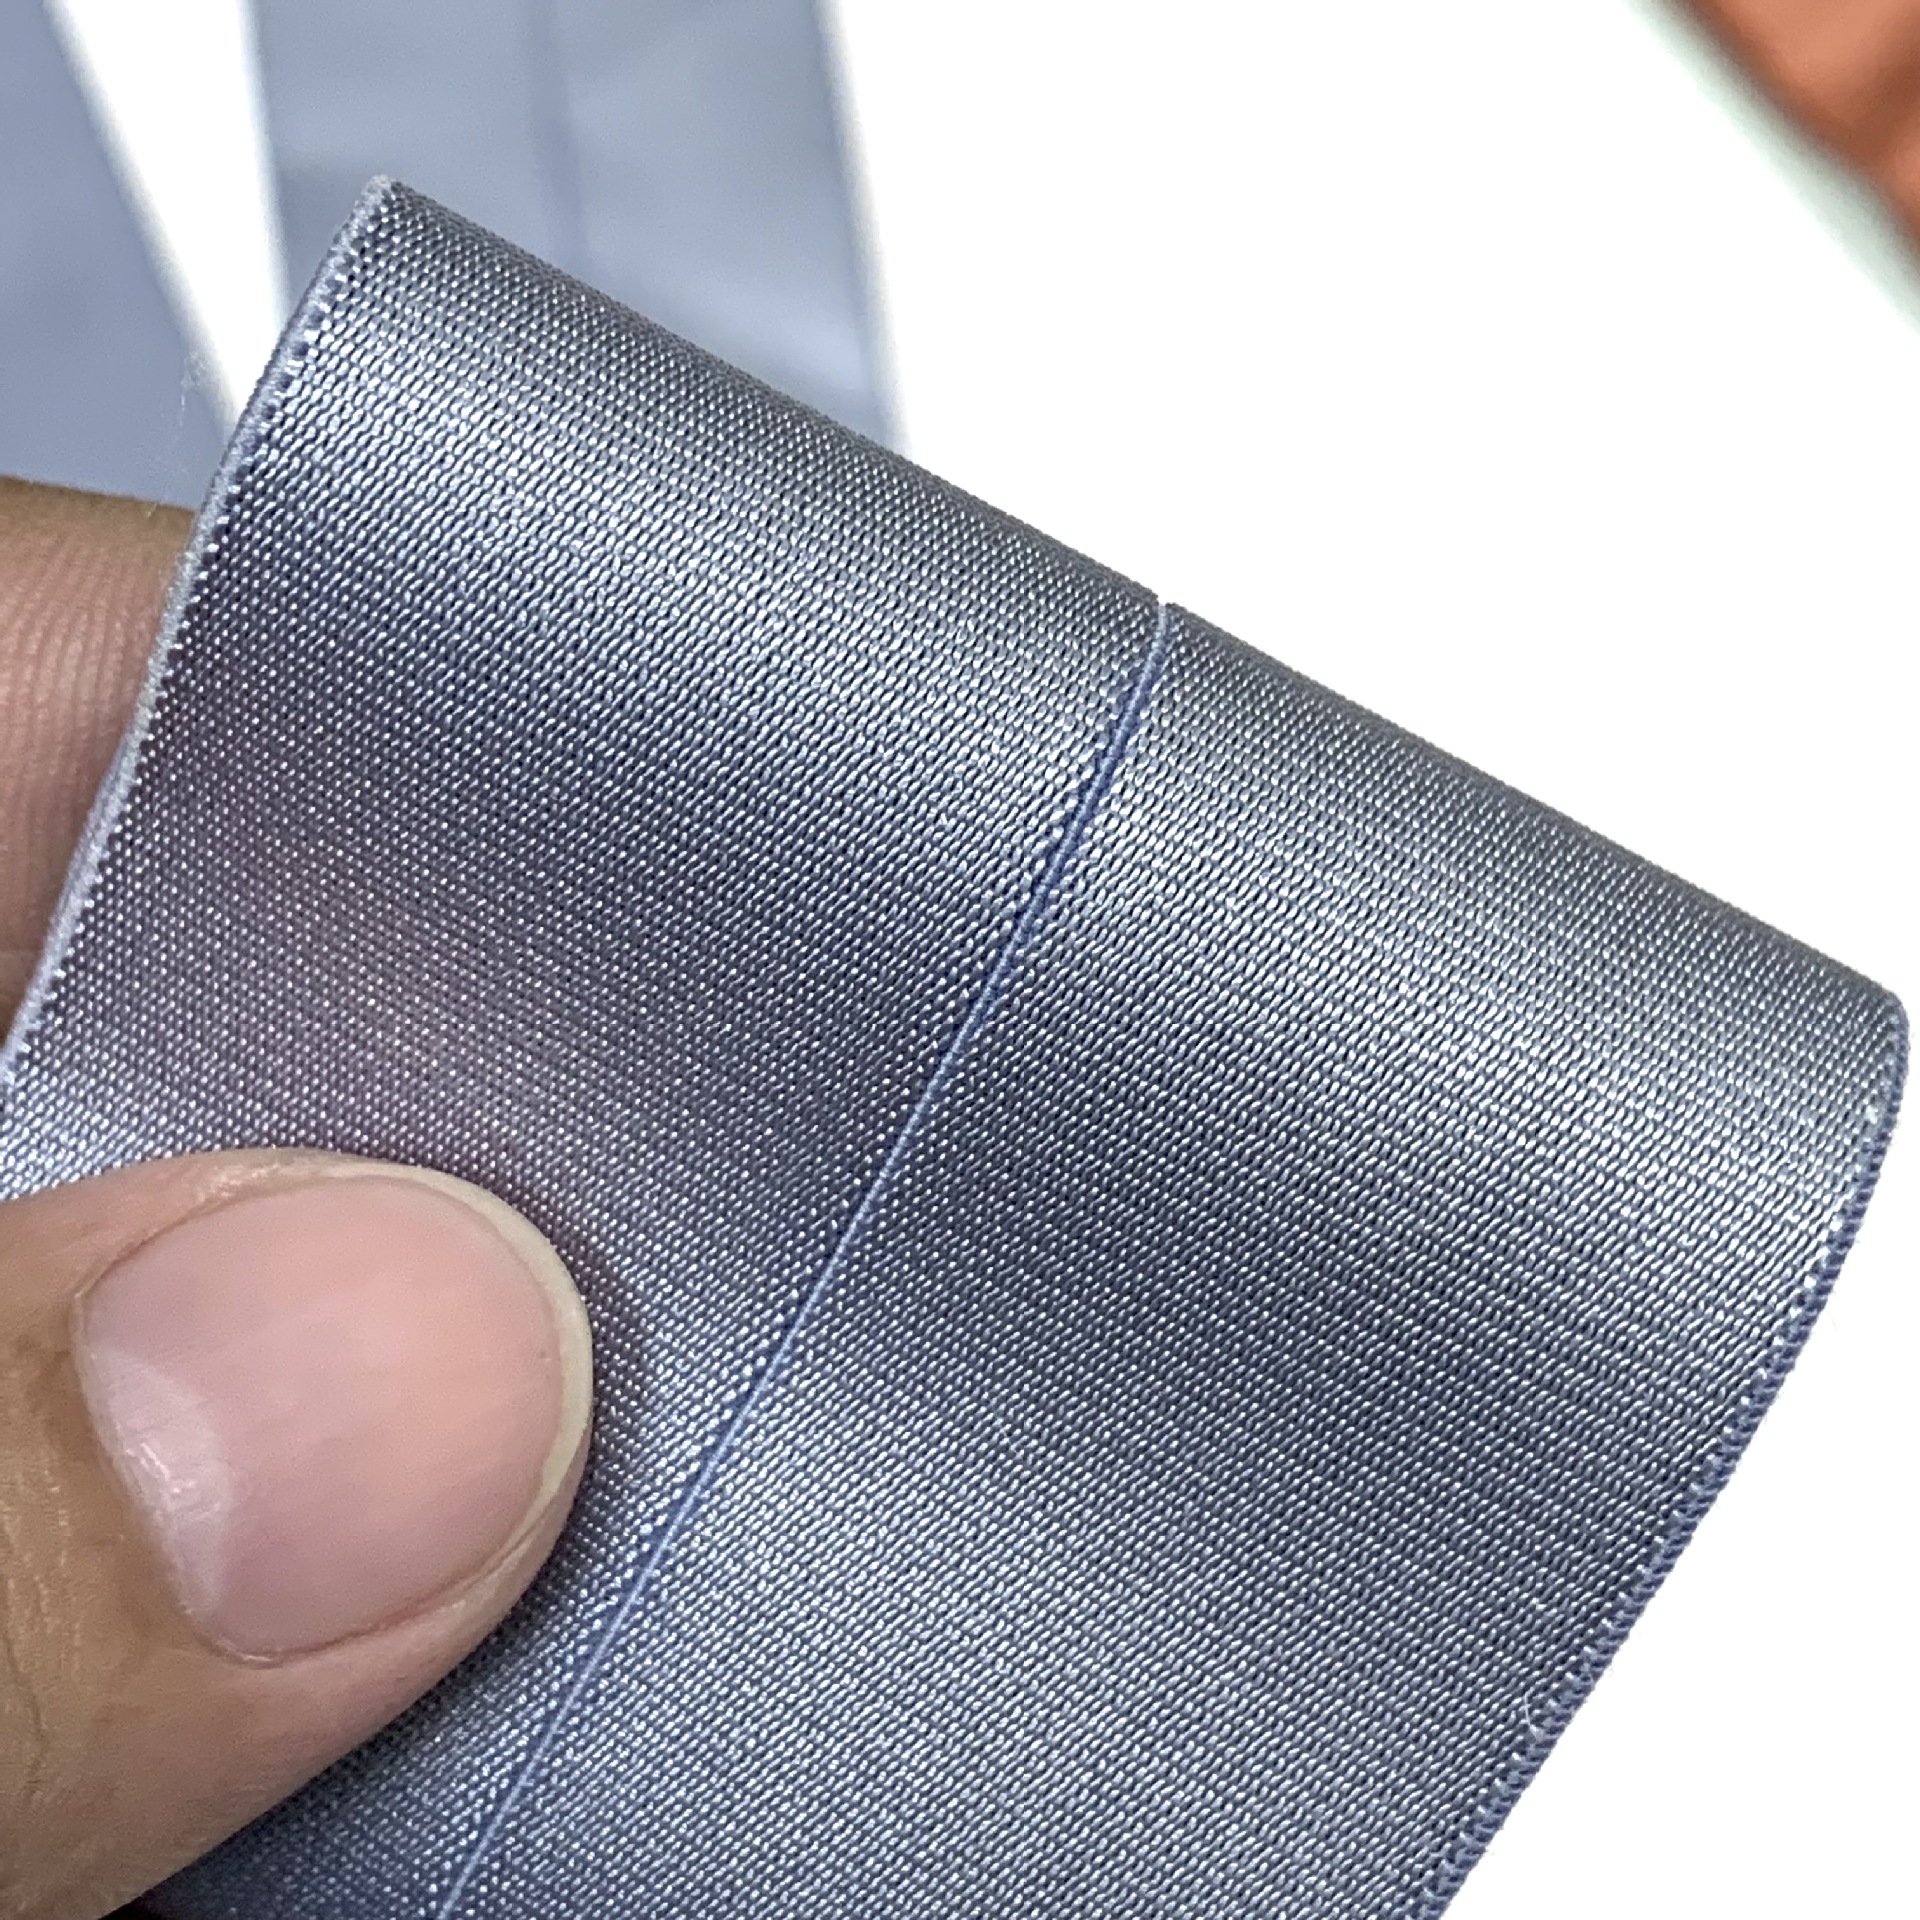 6cm Mercerized Folding Elastic Band Nylon Thickened Bright Silk Elastic Band Skirt Belt Folding Edge Elastic Edge Taping Machine